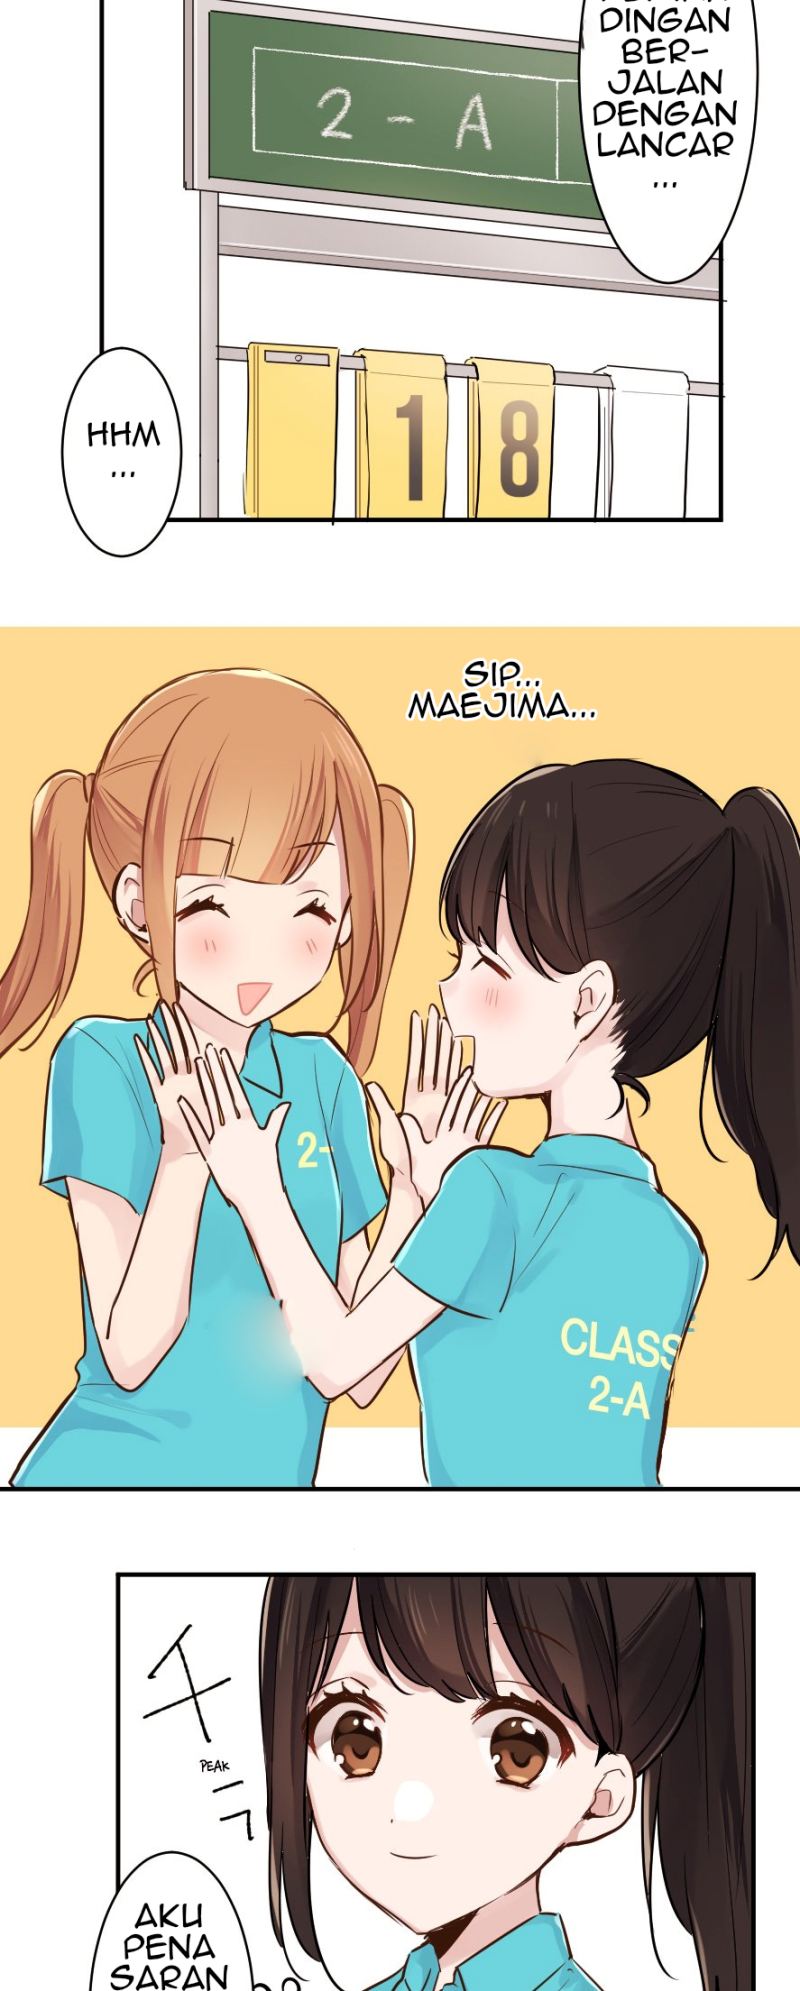 Class Maid (shimamura) Chapter 12